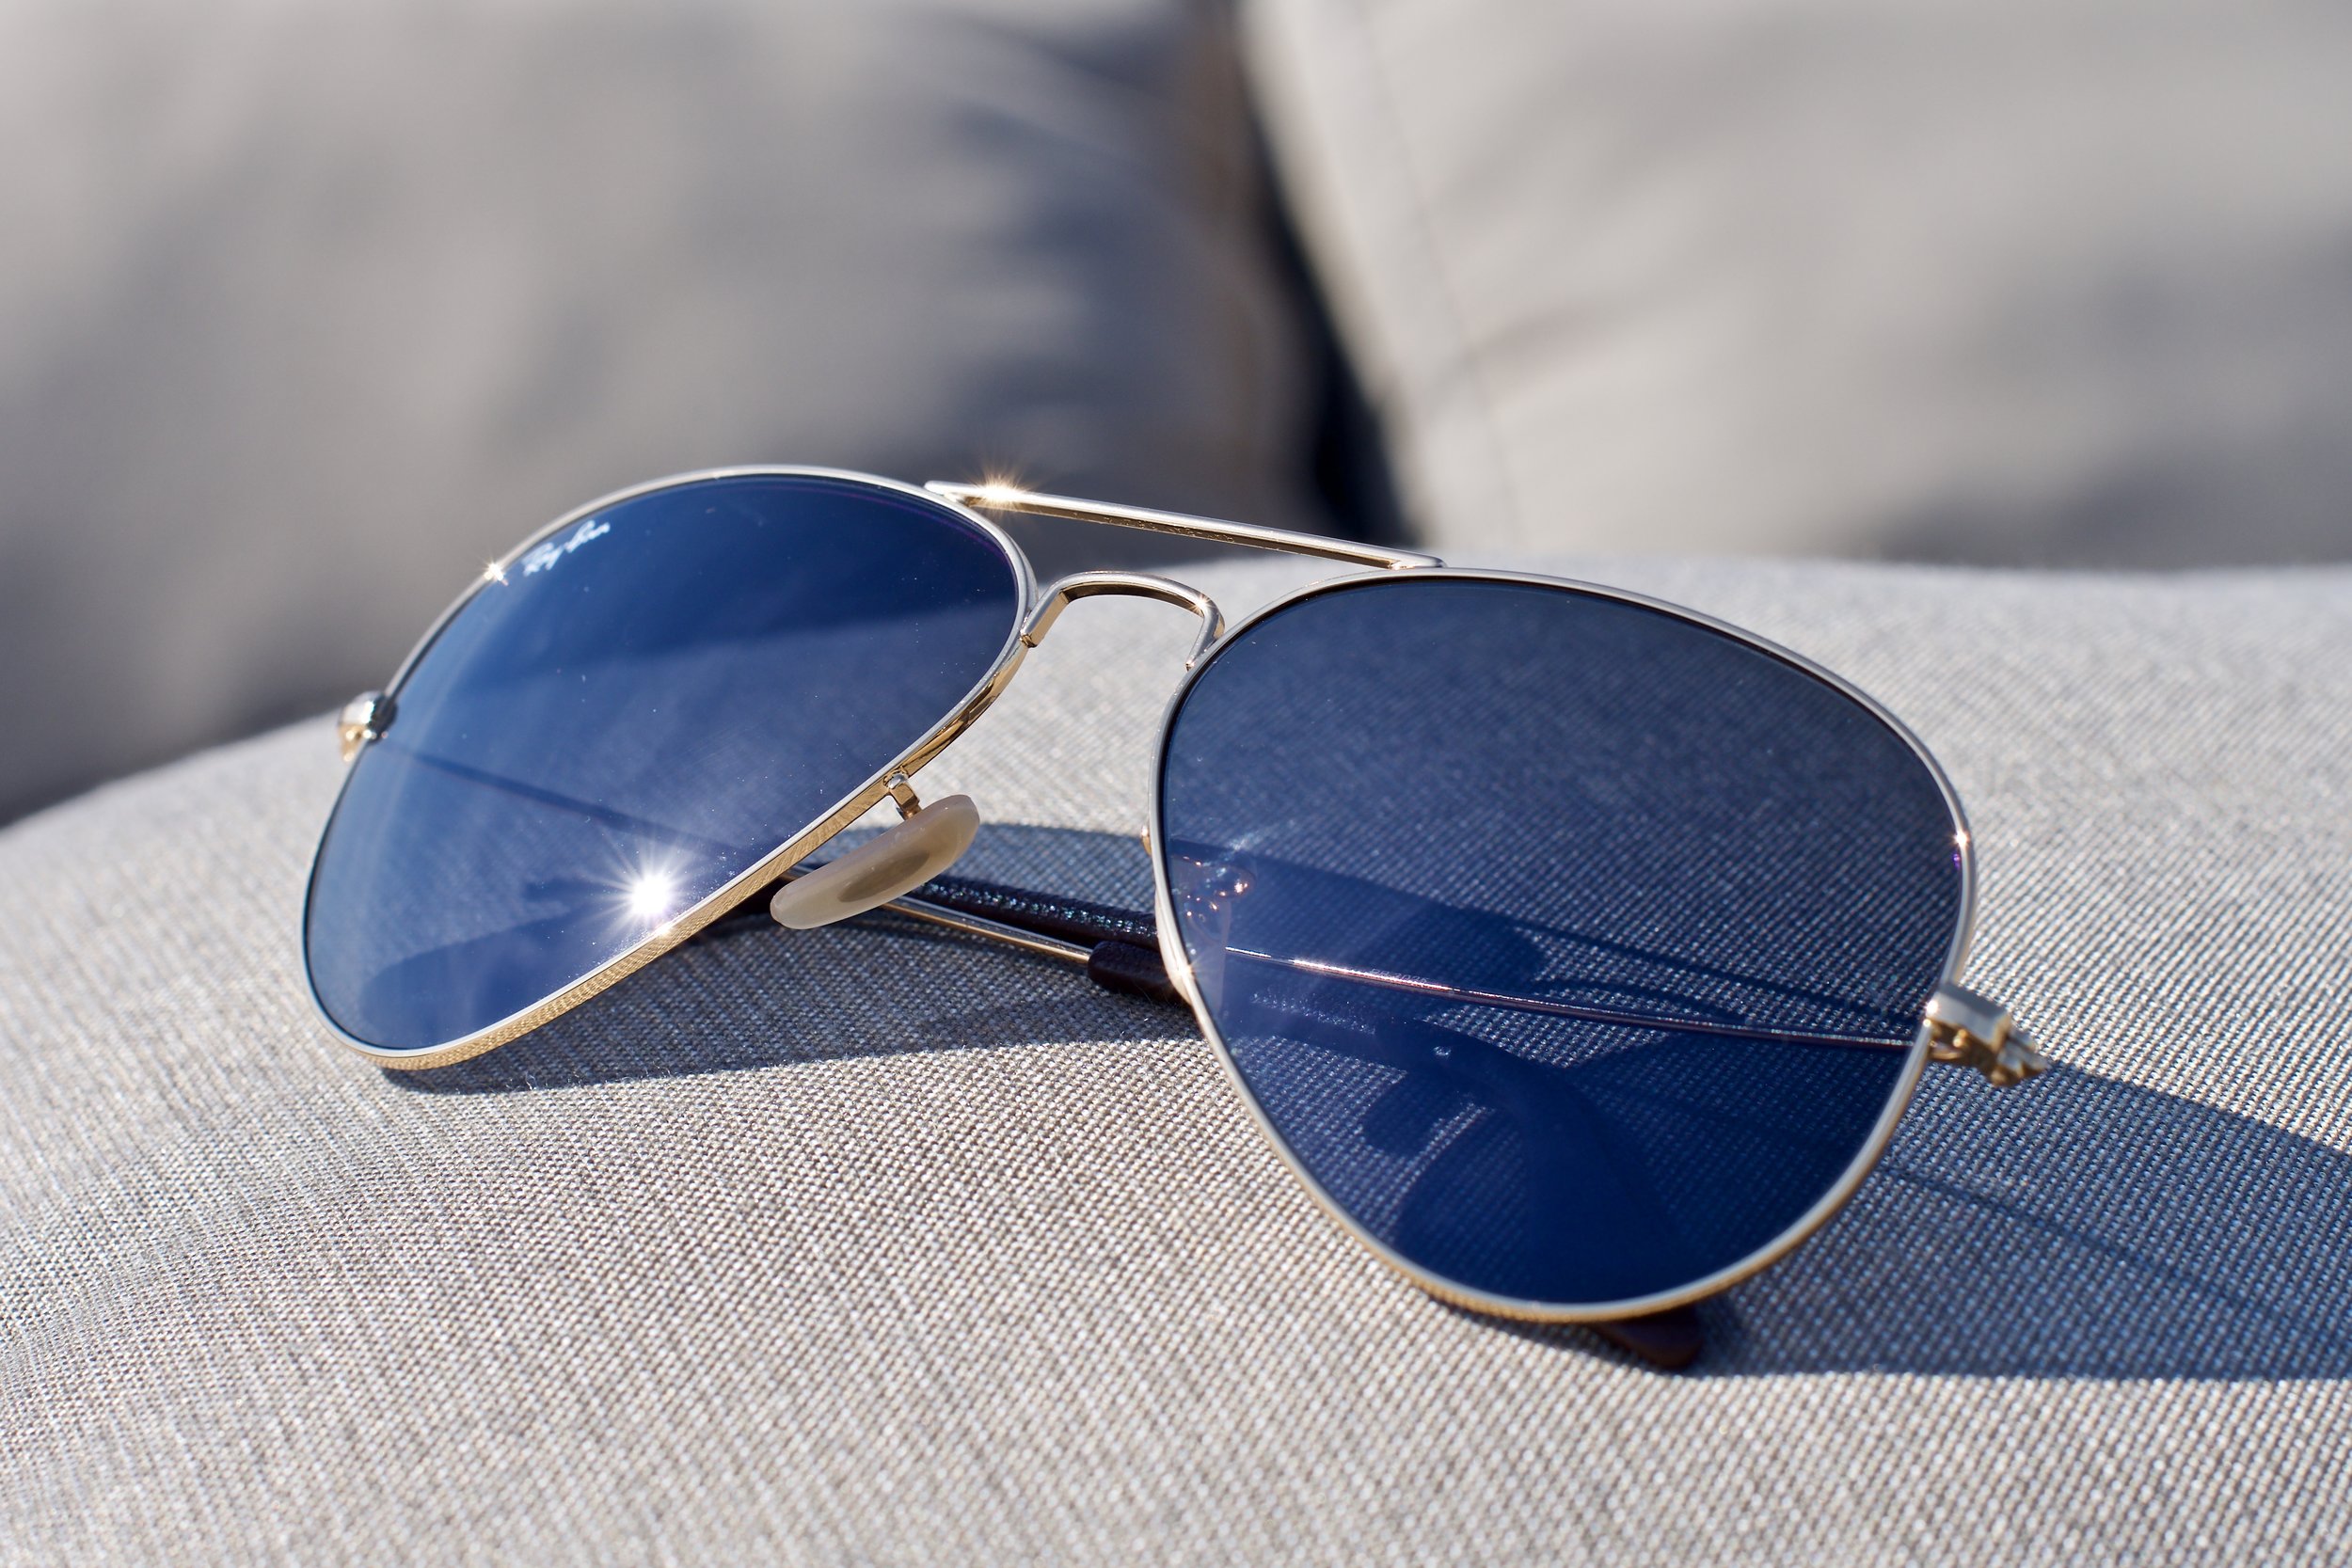 ray ban latest sunglasses 2018